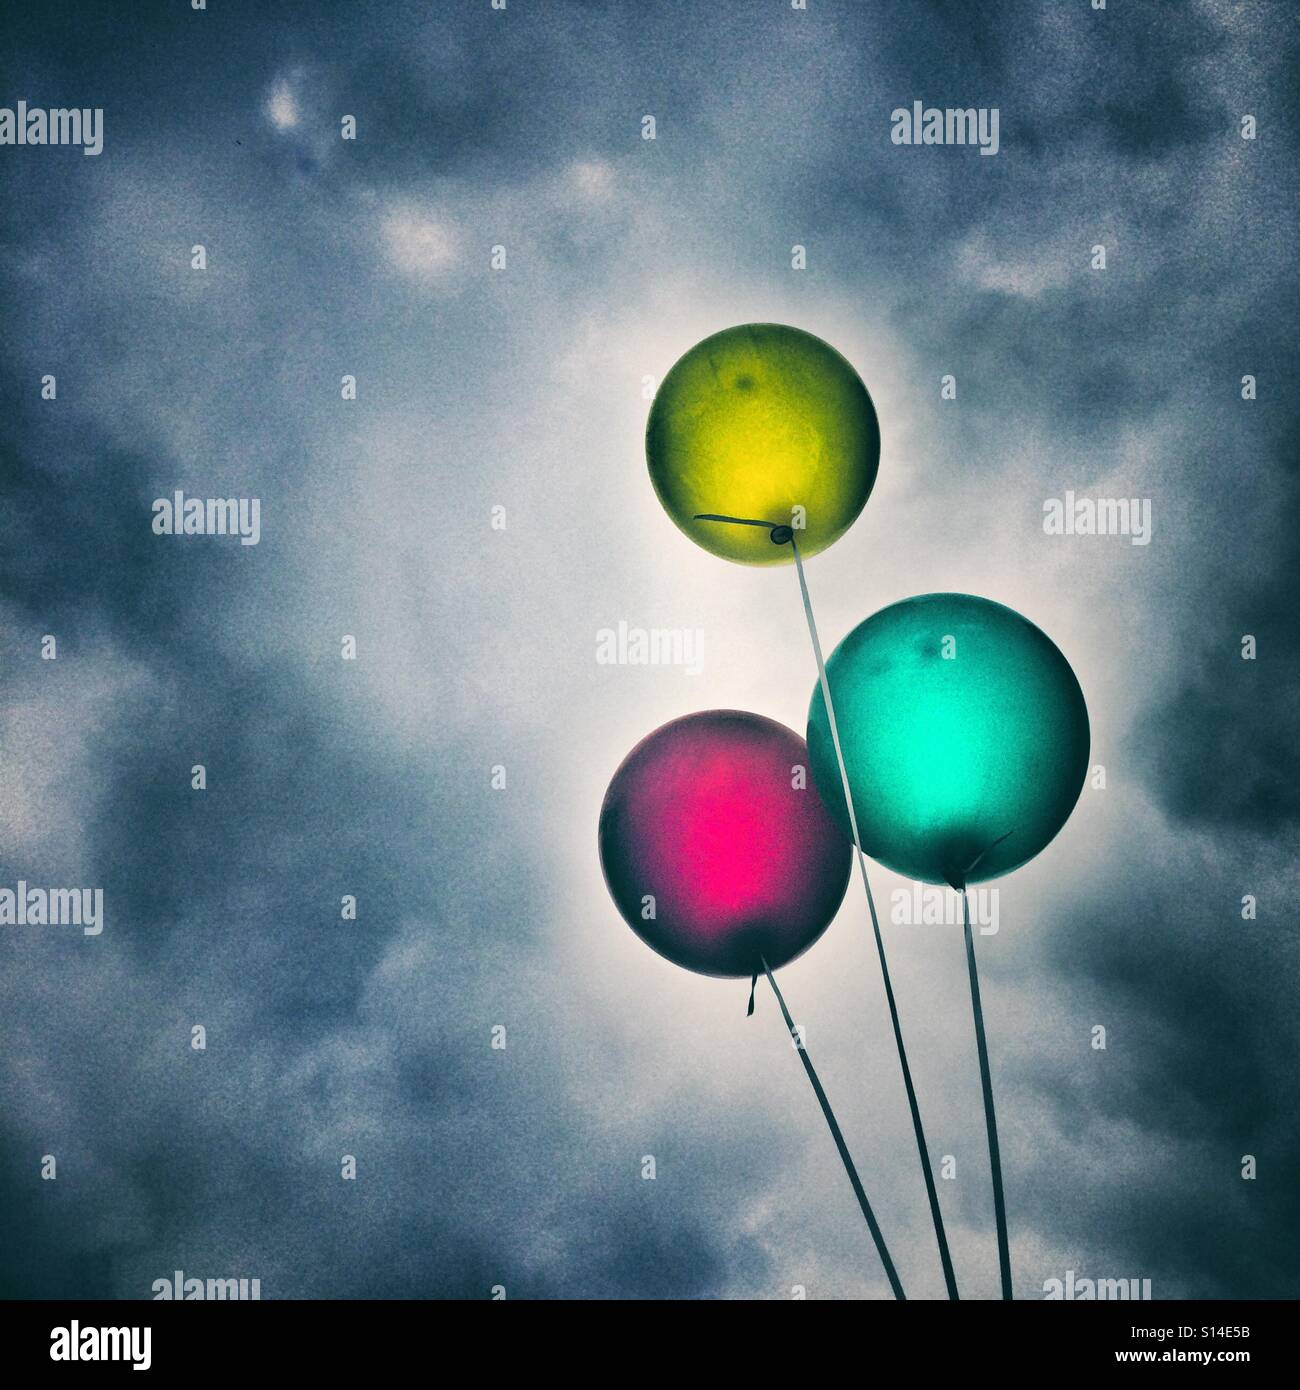 Three balloons against a dark cloudy sky Stock Photo